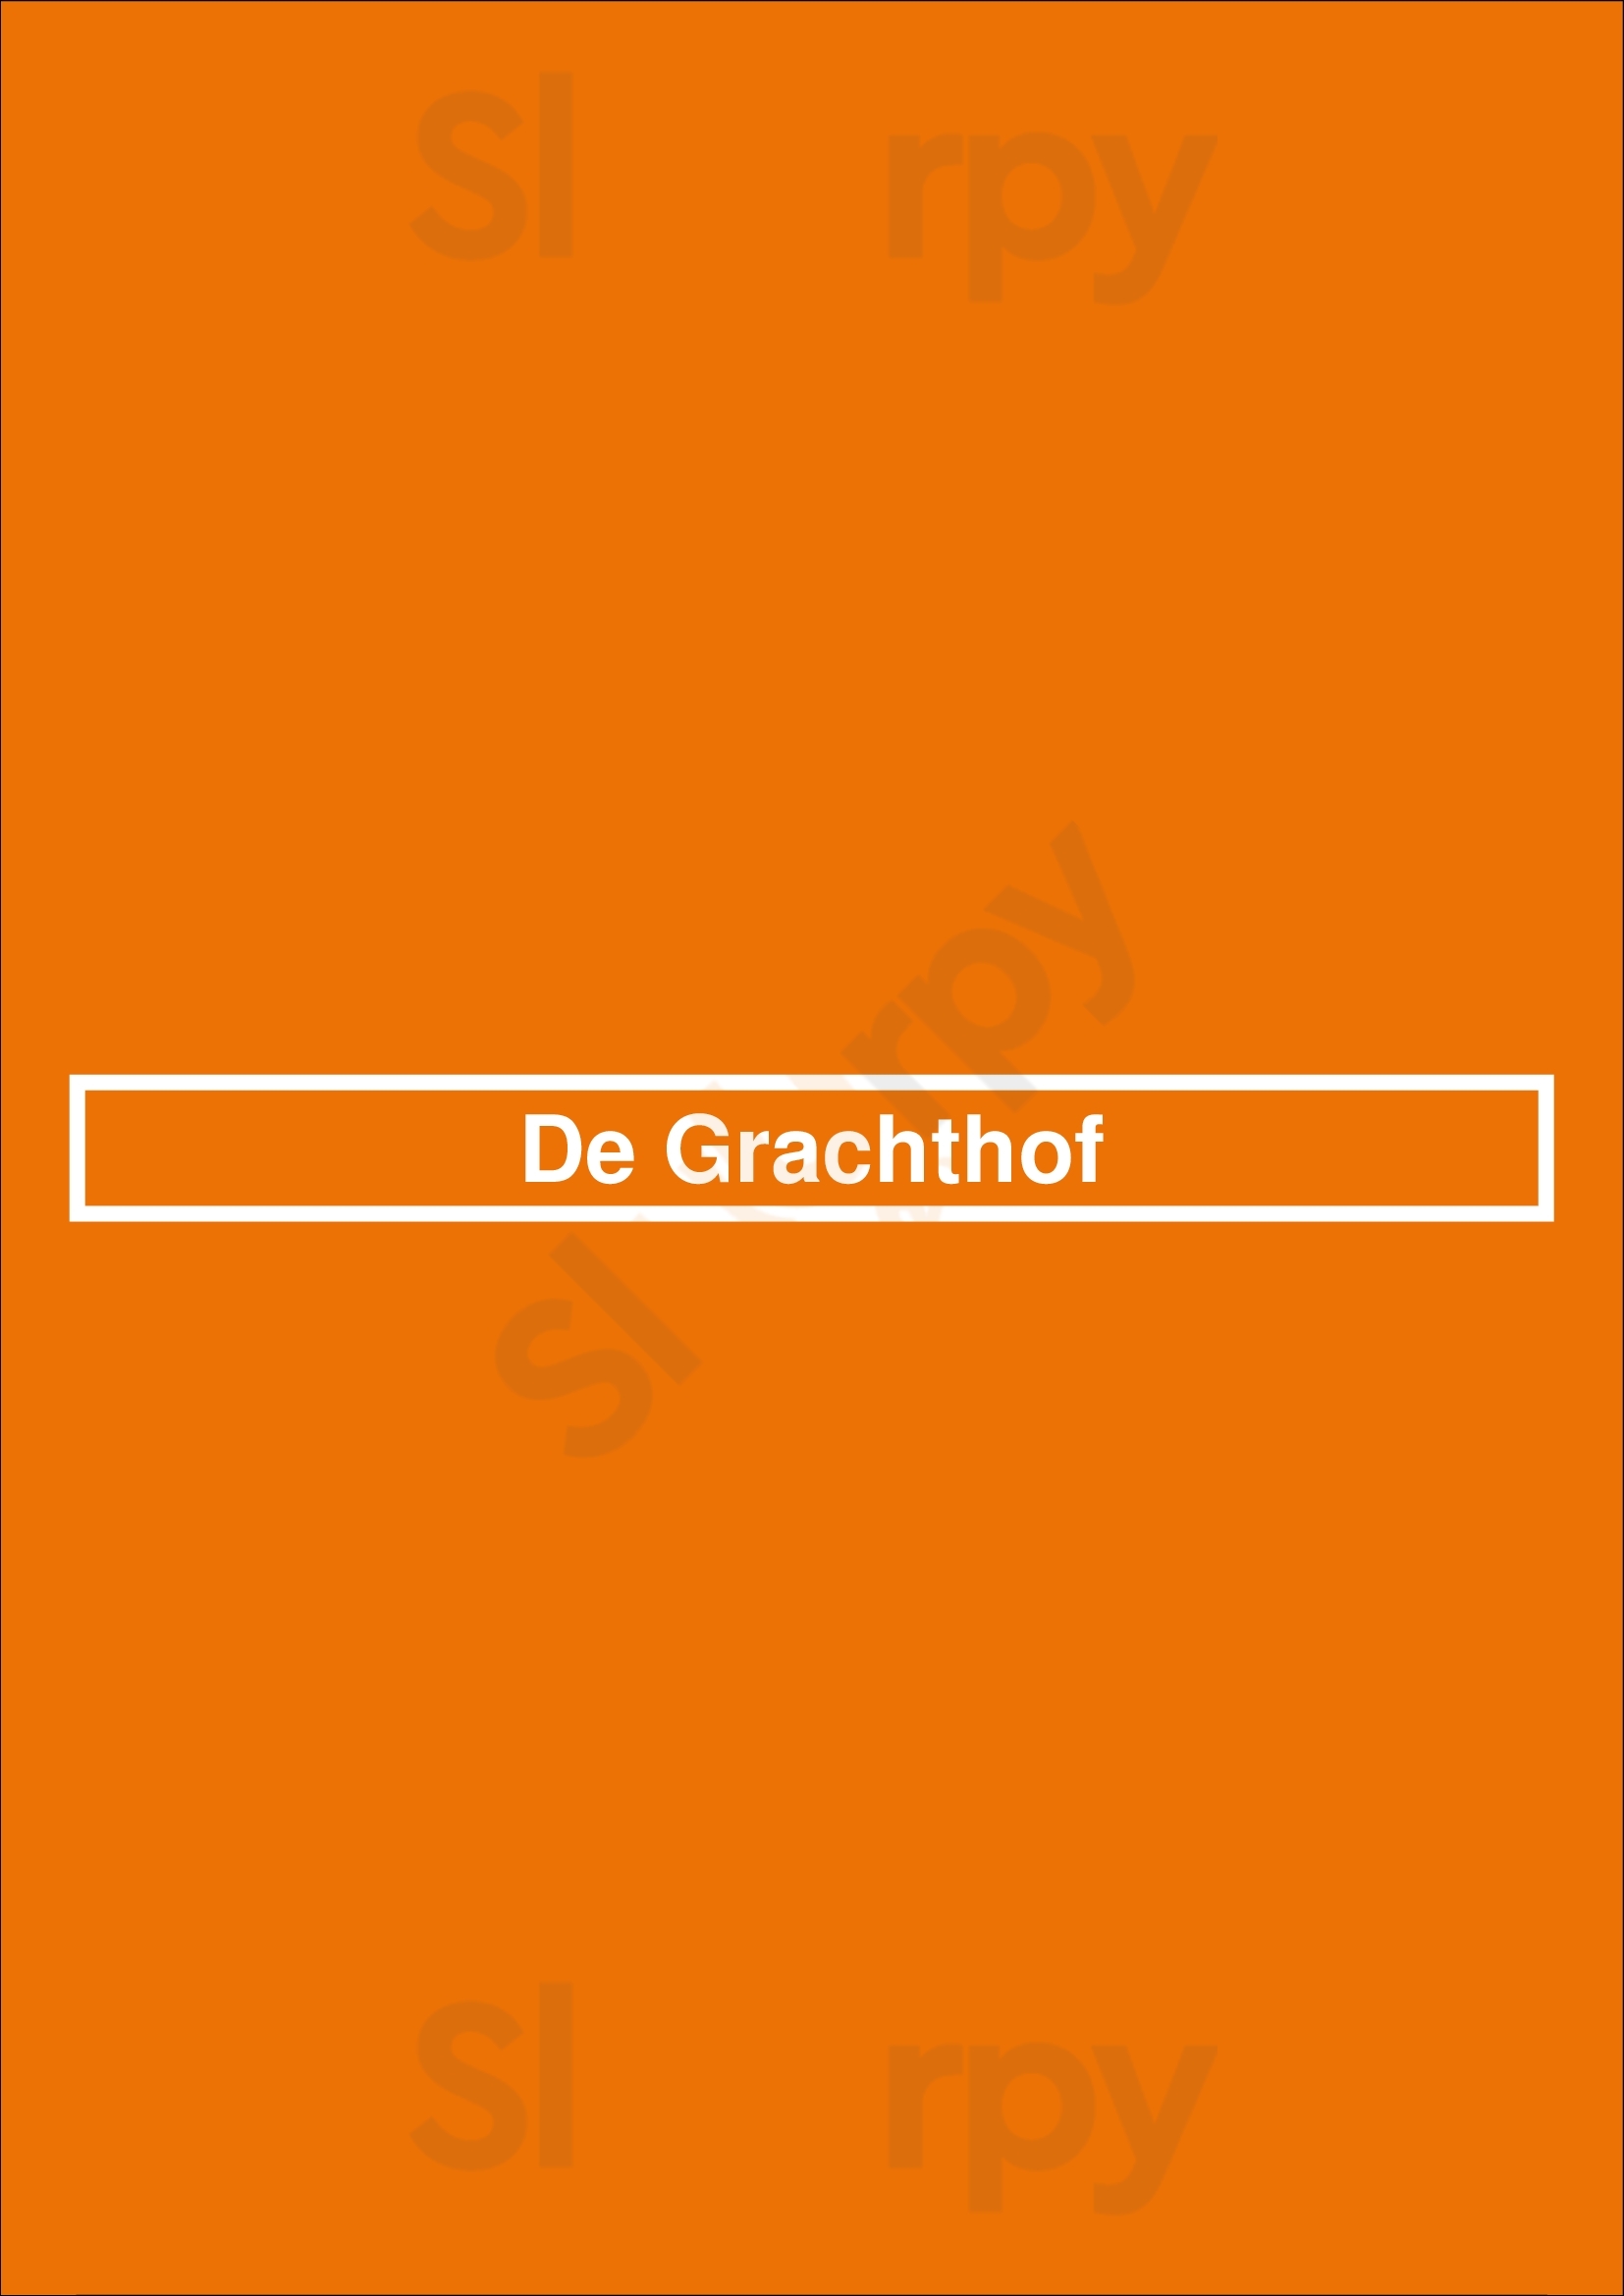 De Grachthof Giethoorn Menu - 1